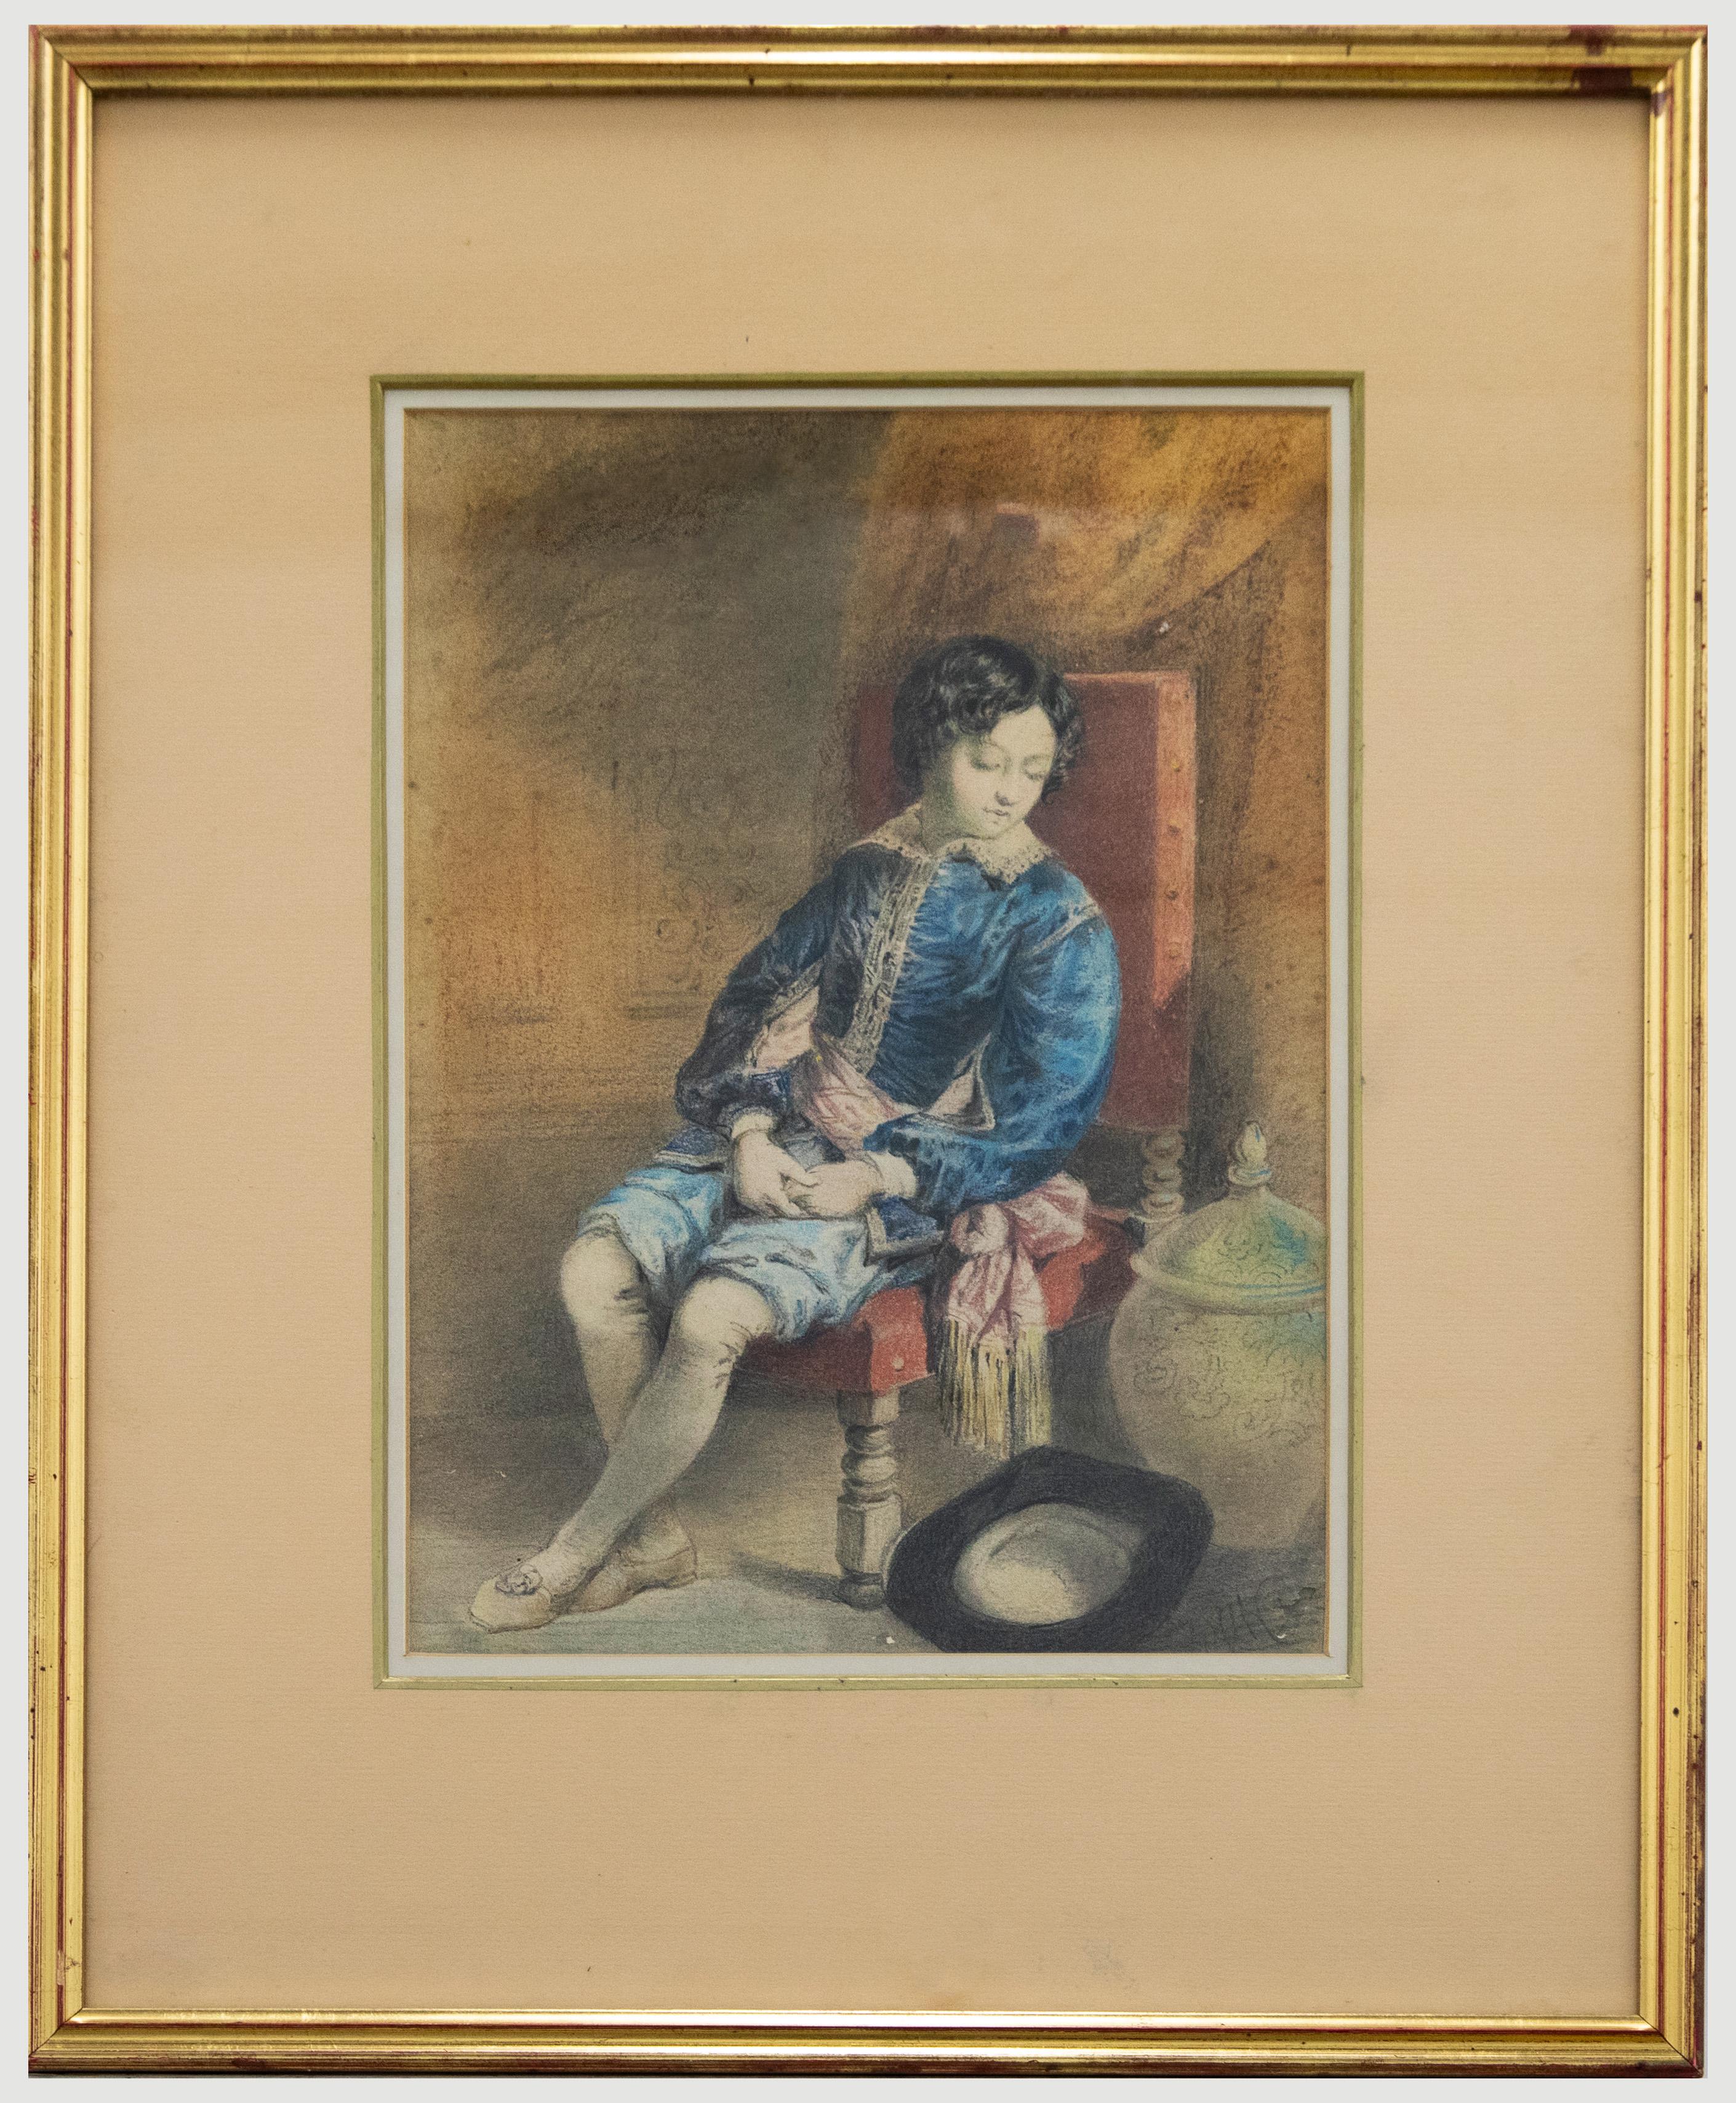 Unknown Portrait - 19th Century Pastel - Young Nobleman